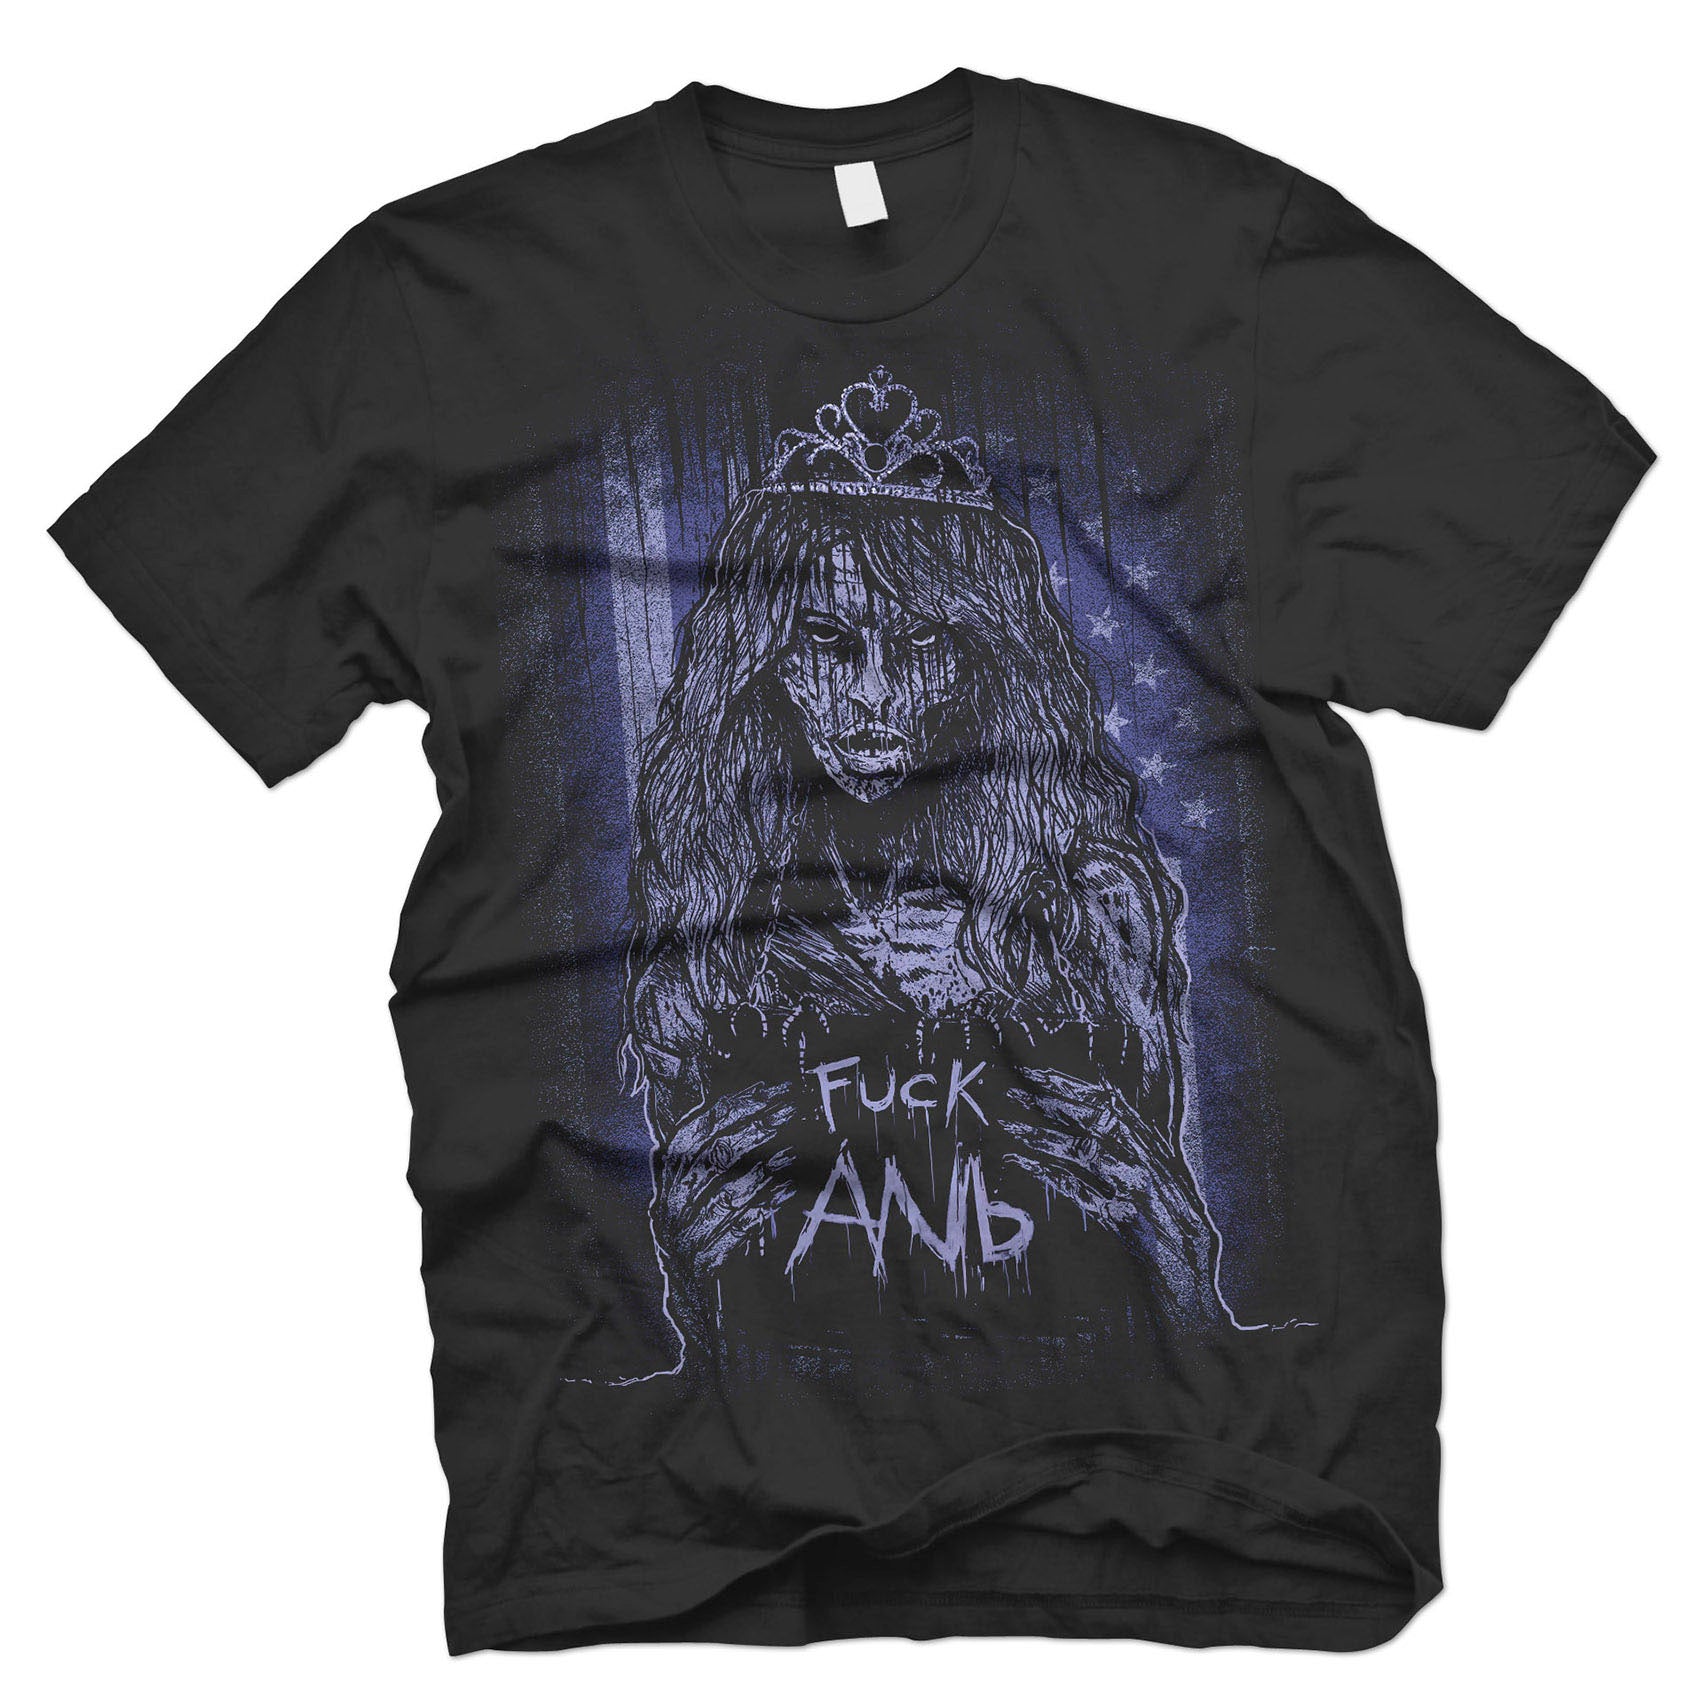 Agoraphobic Nosebleed "Fuck AnB T Shirt" T-Shirt